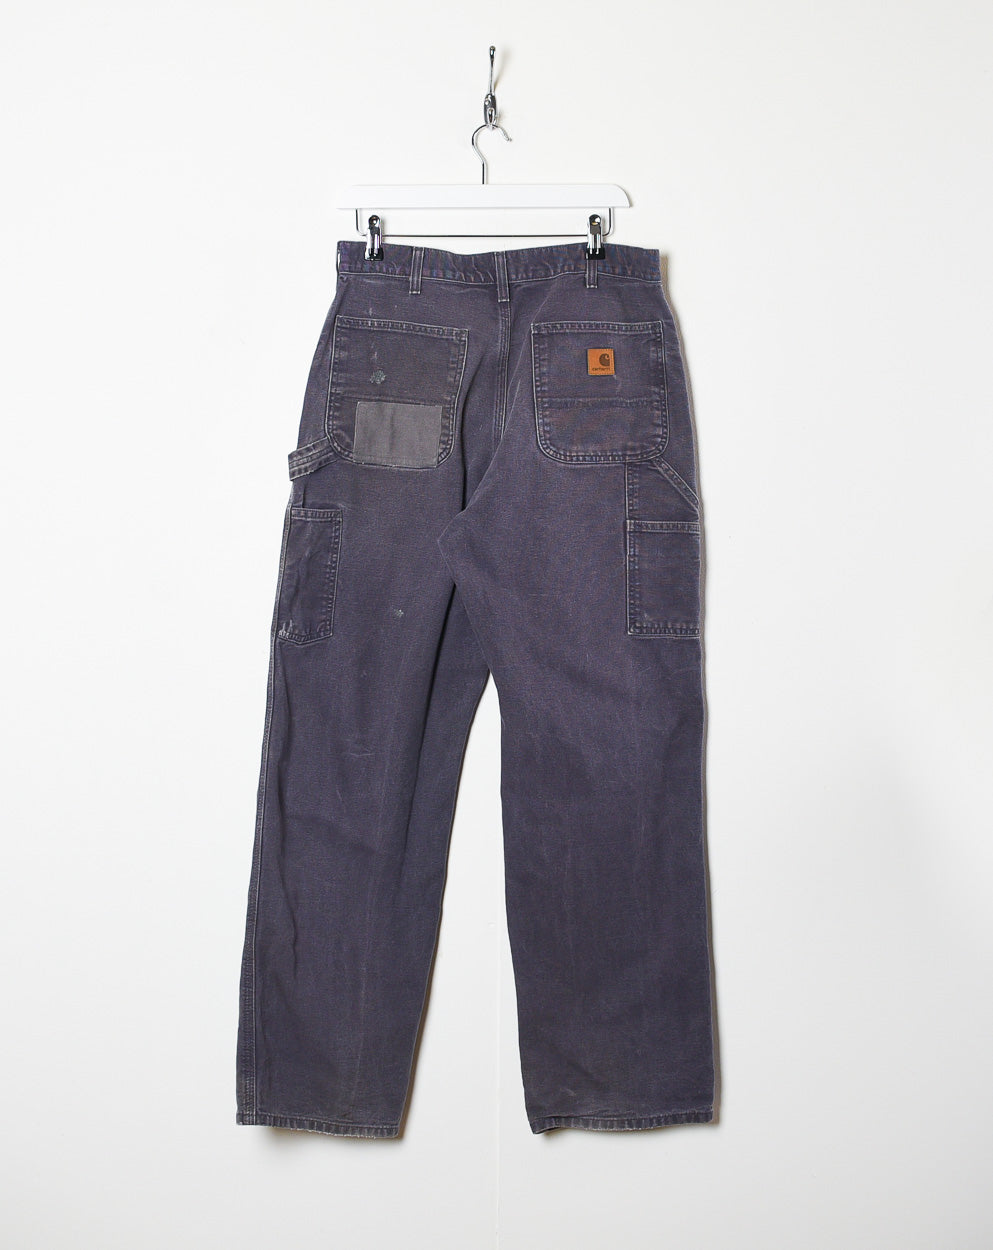 Navy Carhartt Carpenter Jeans - W32 L30